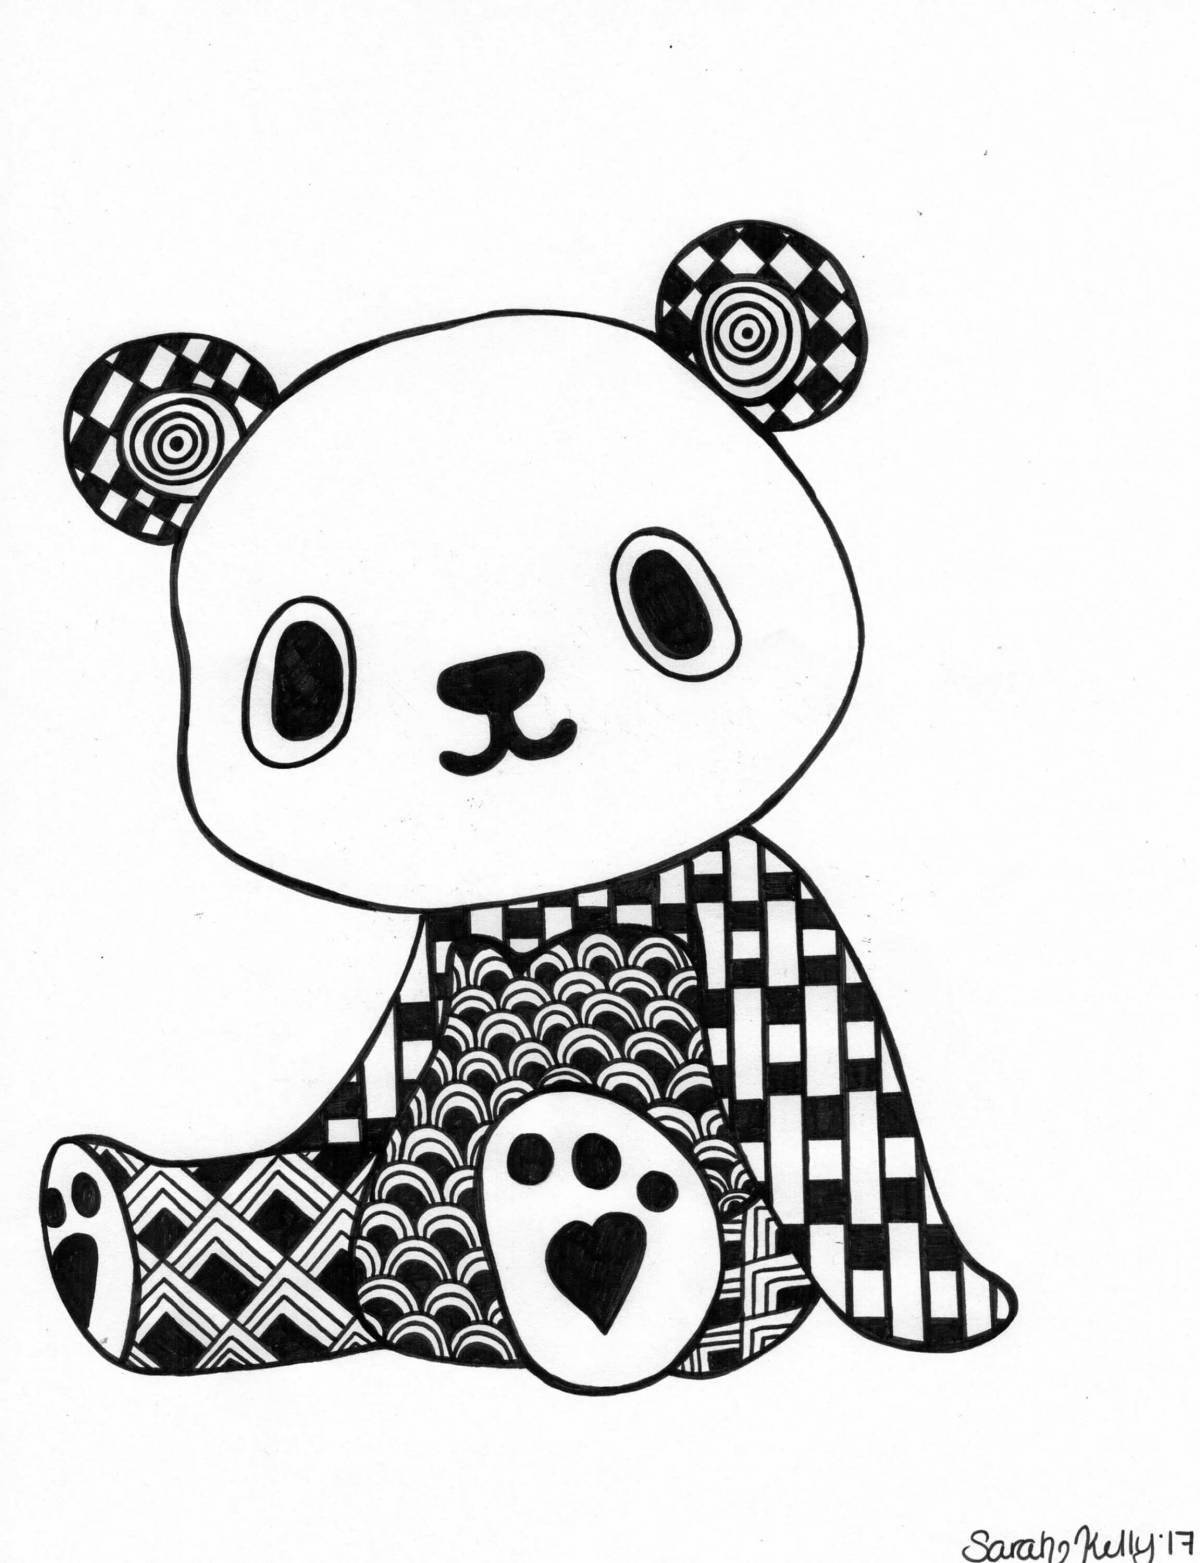 Soft cute panda coloring book